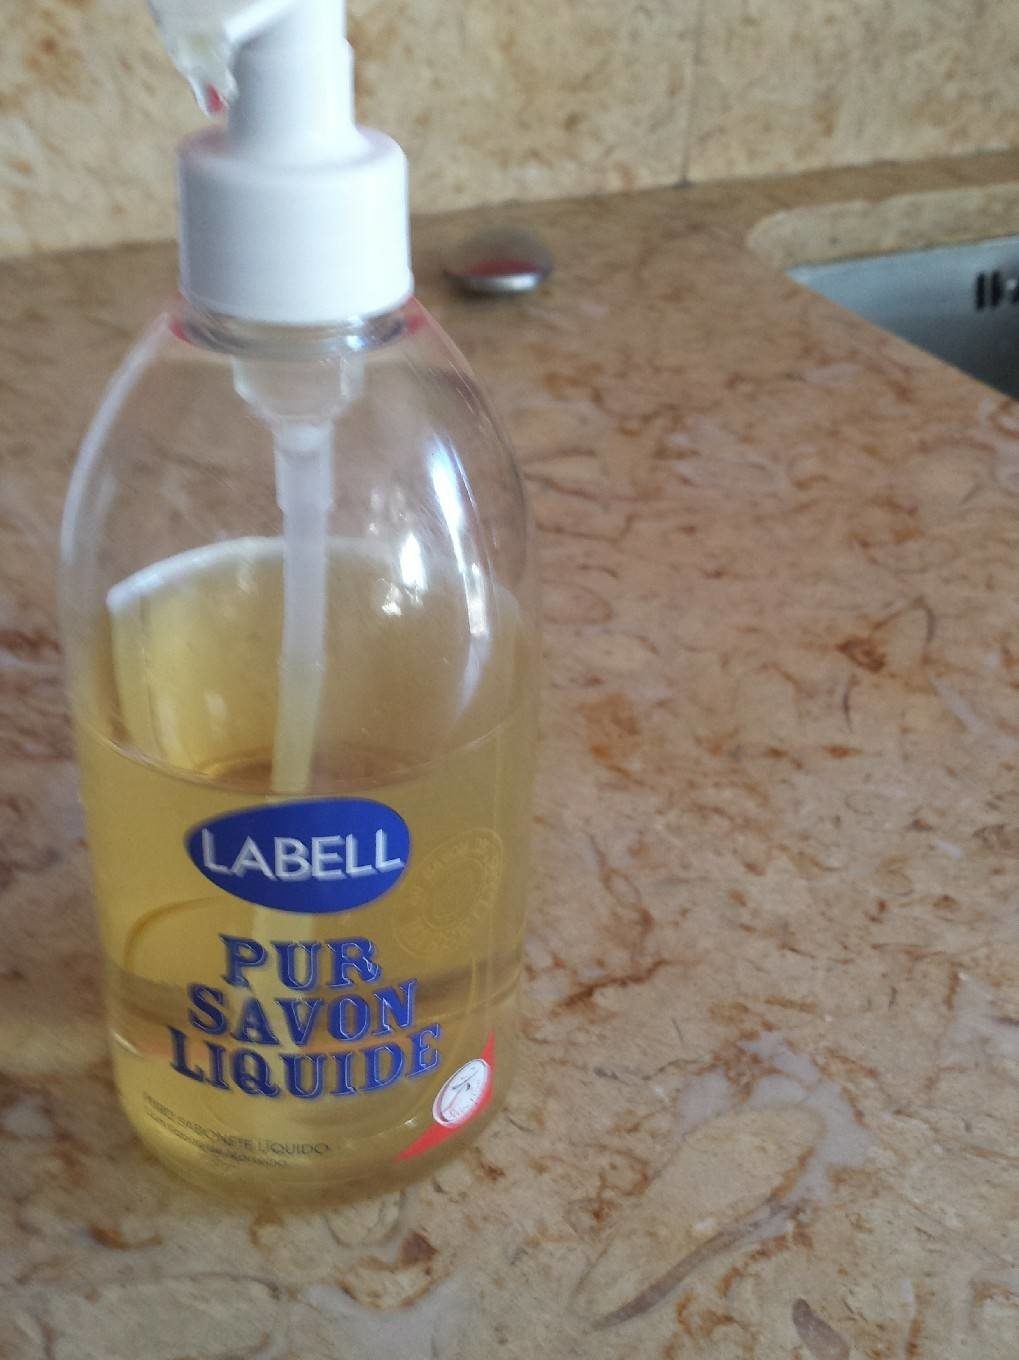 Pur savon liquide - Produto - fr